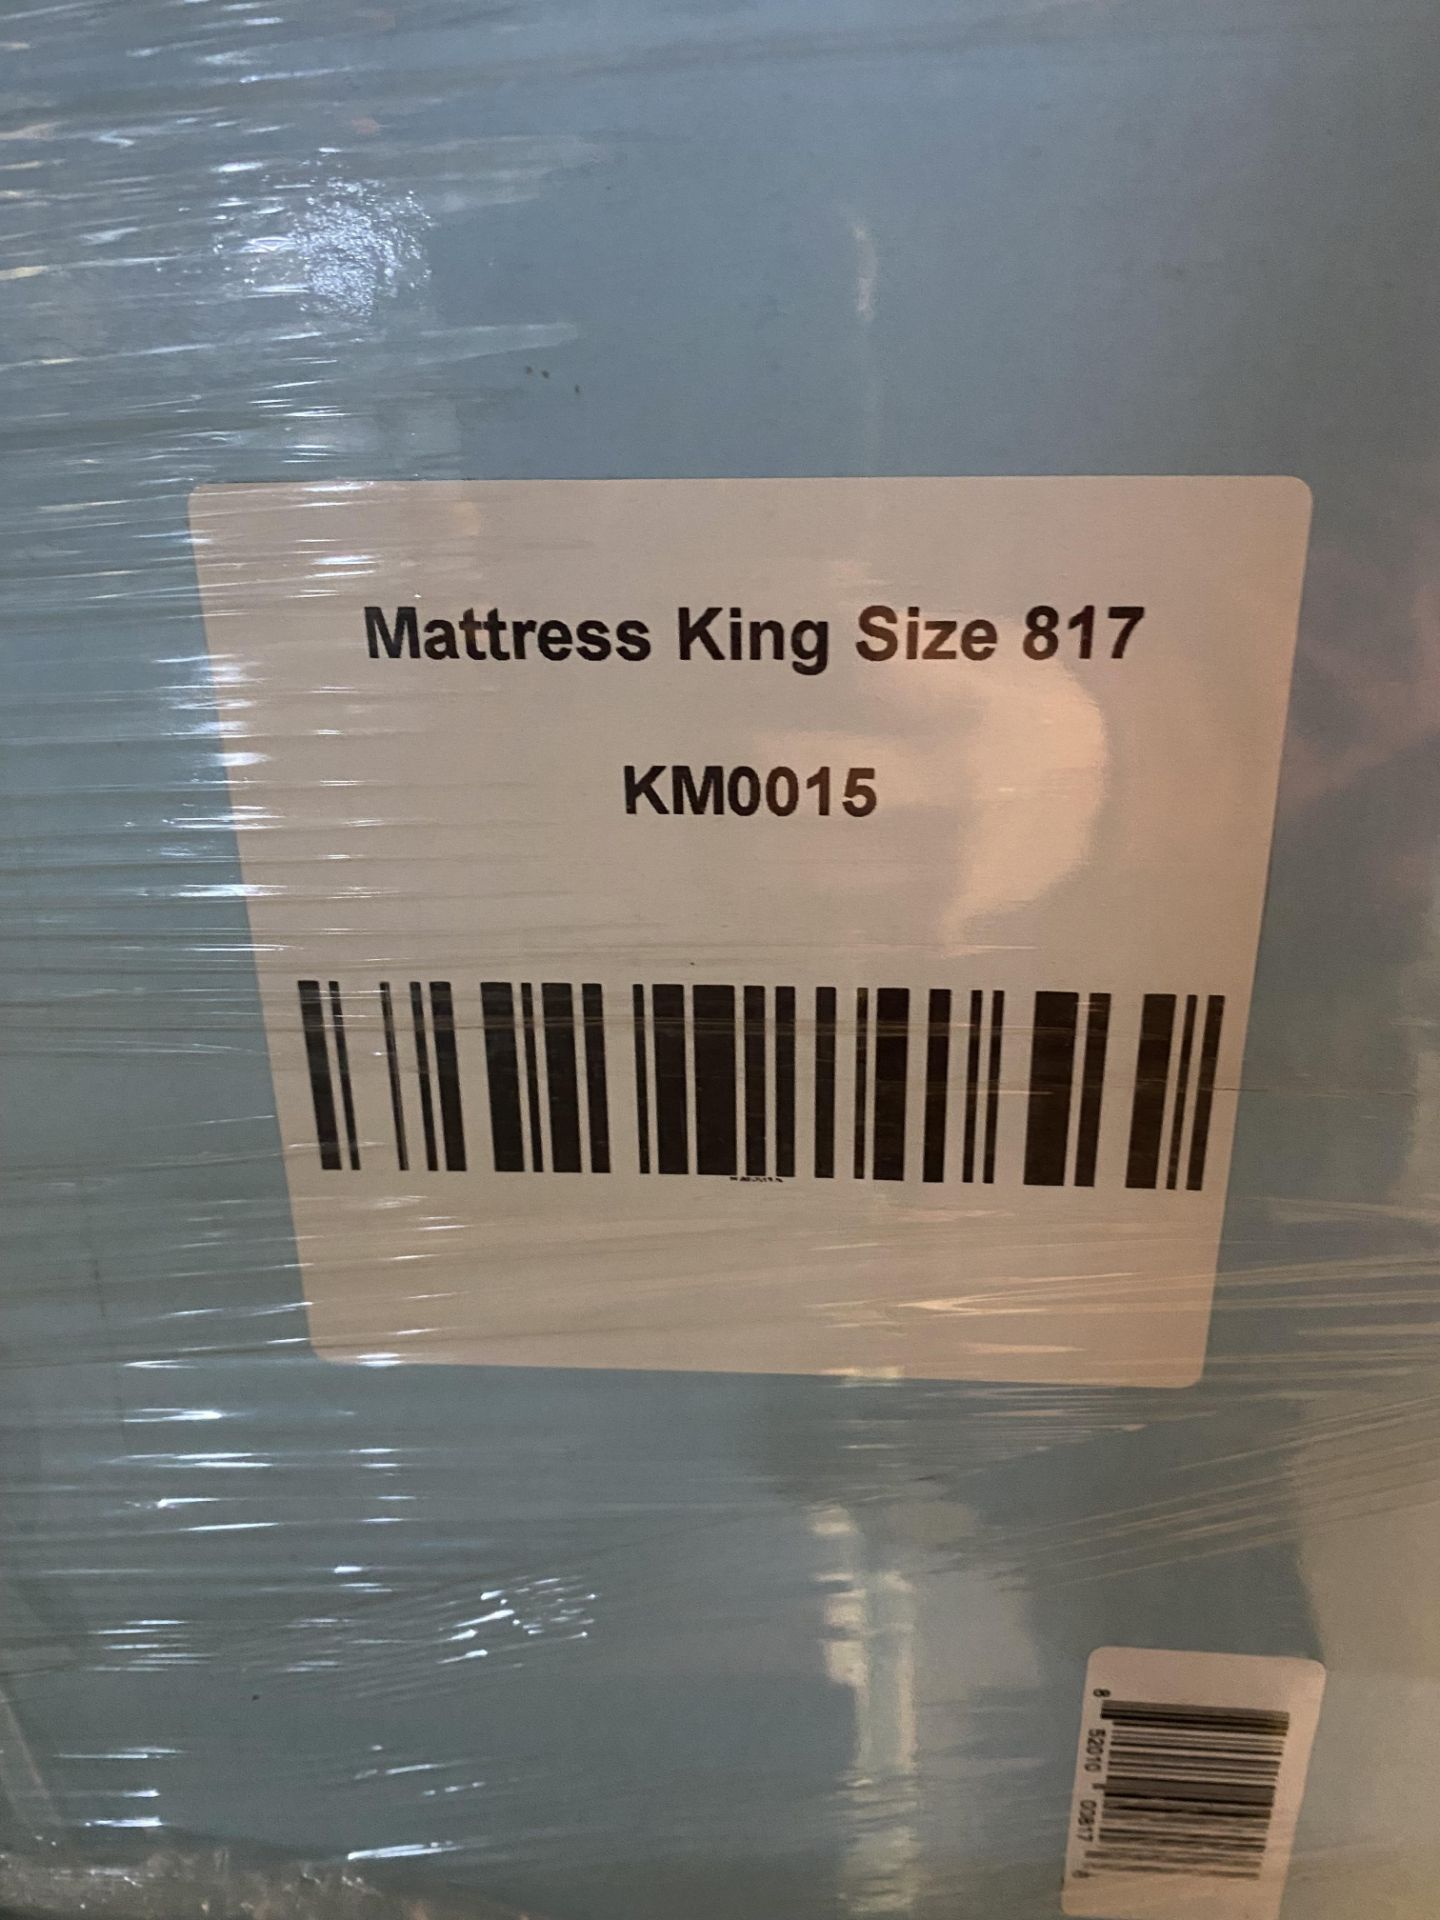 ComfaSleep KM0016 King Size 815 Mattress - Bild 6 aus 6